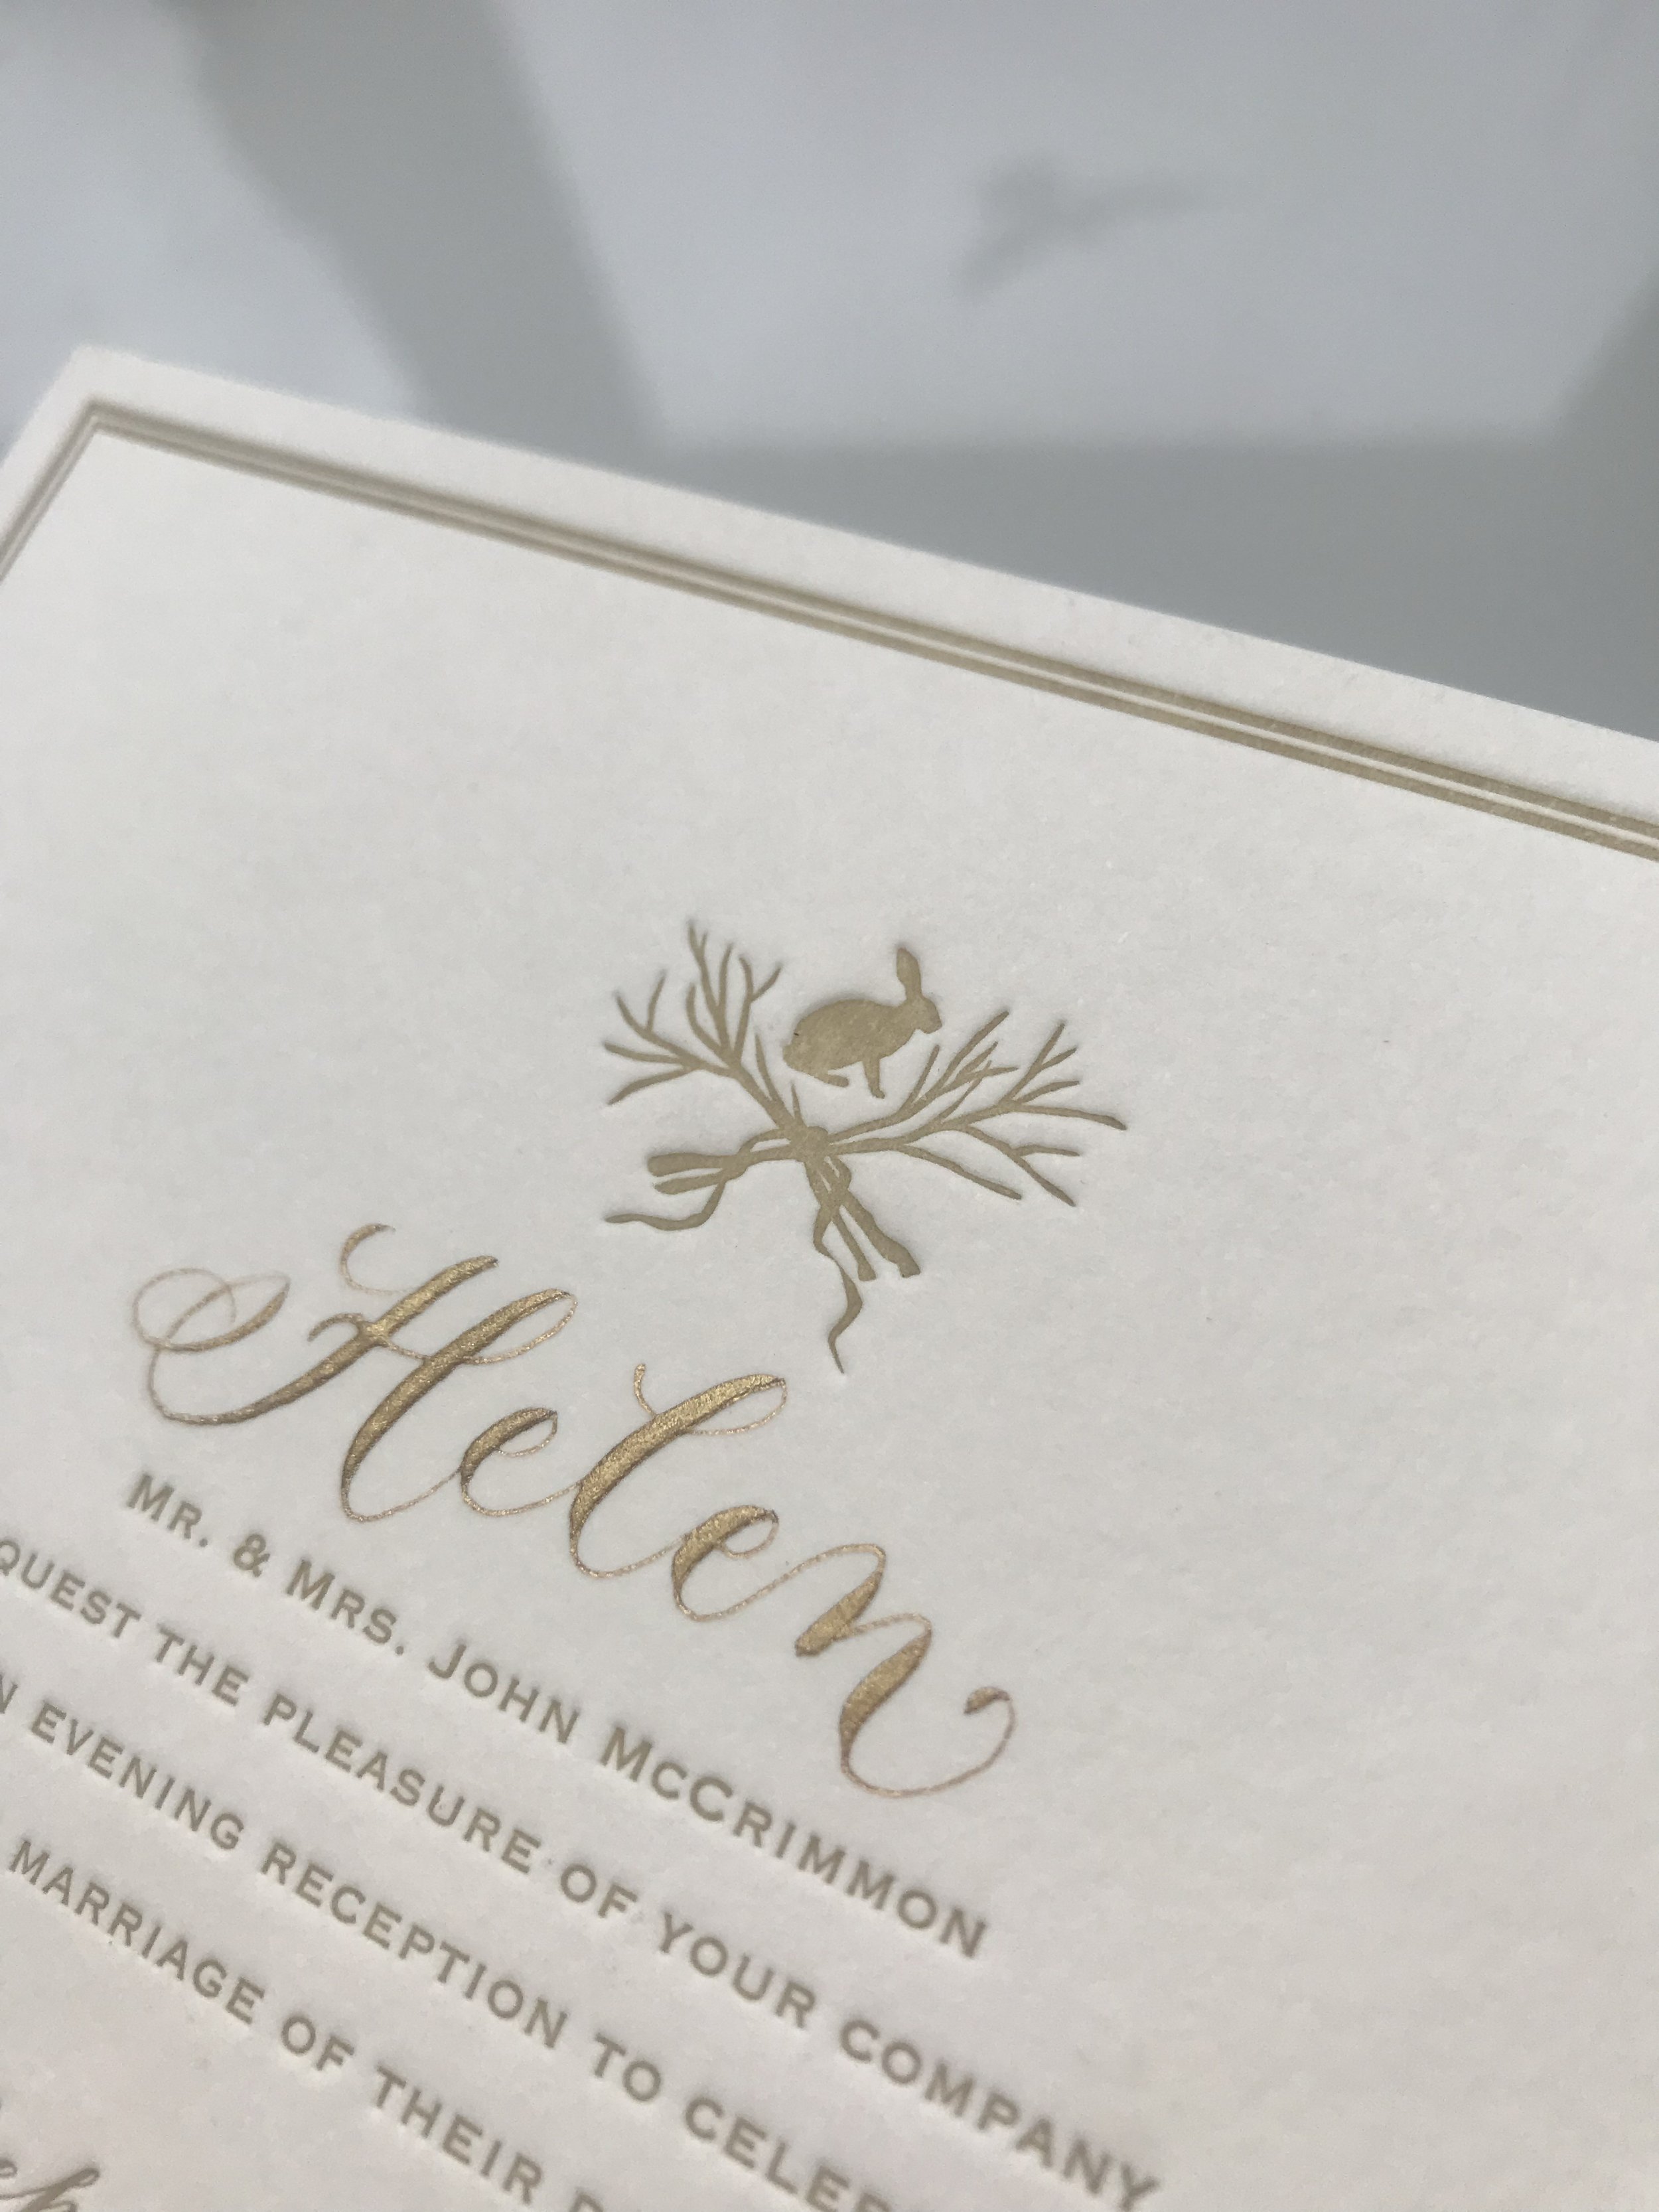 Calligraphy on wedding invitations.jpg